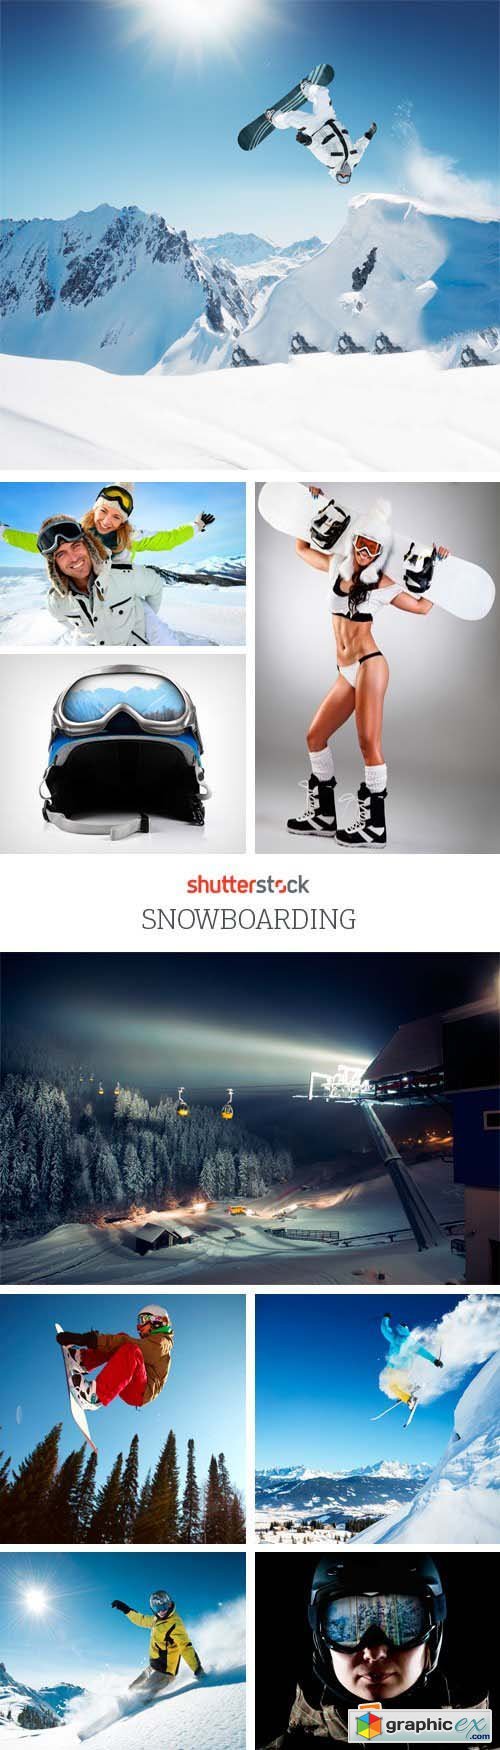 Amazing SS - Snowboarding, 25xJPGs